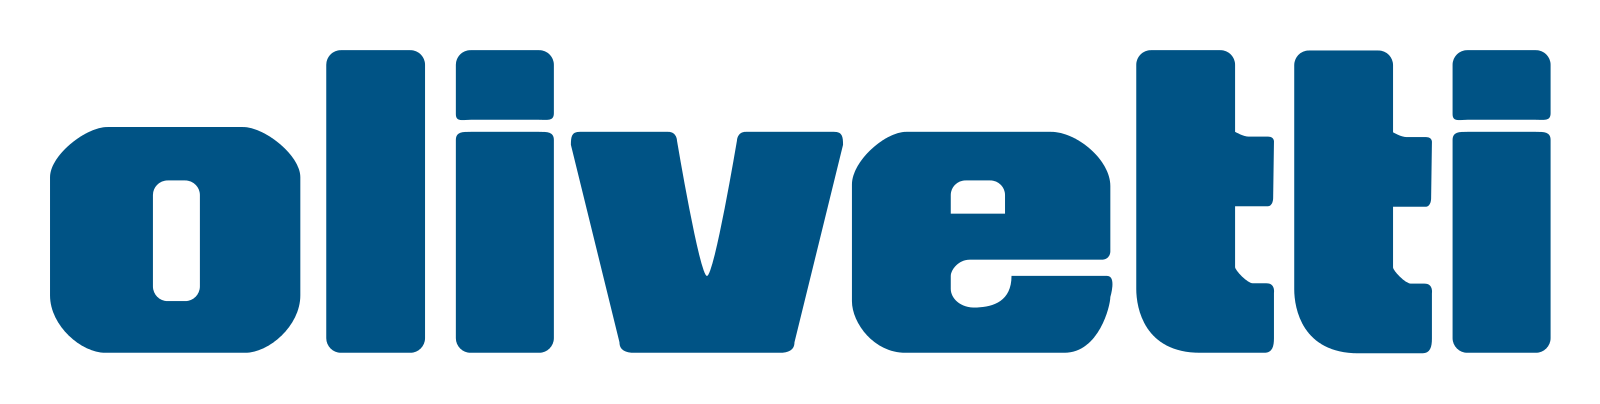 olivetti_logo